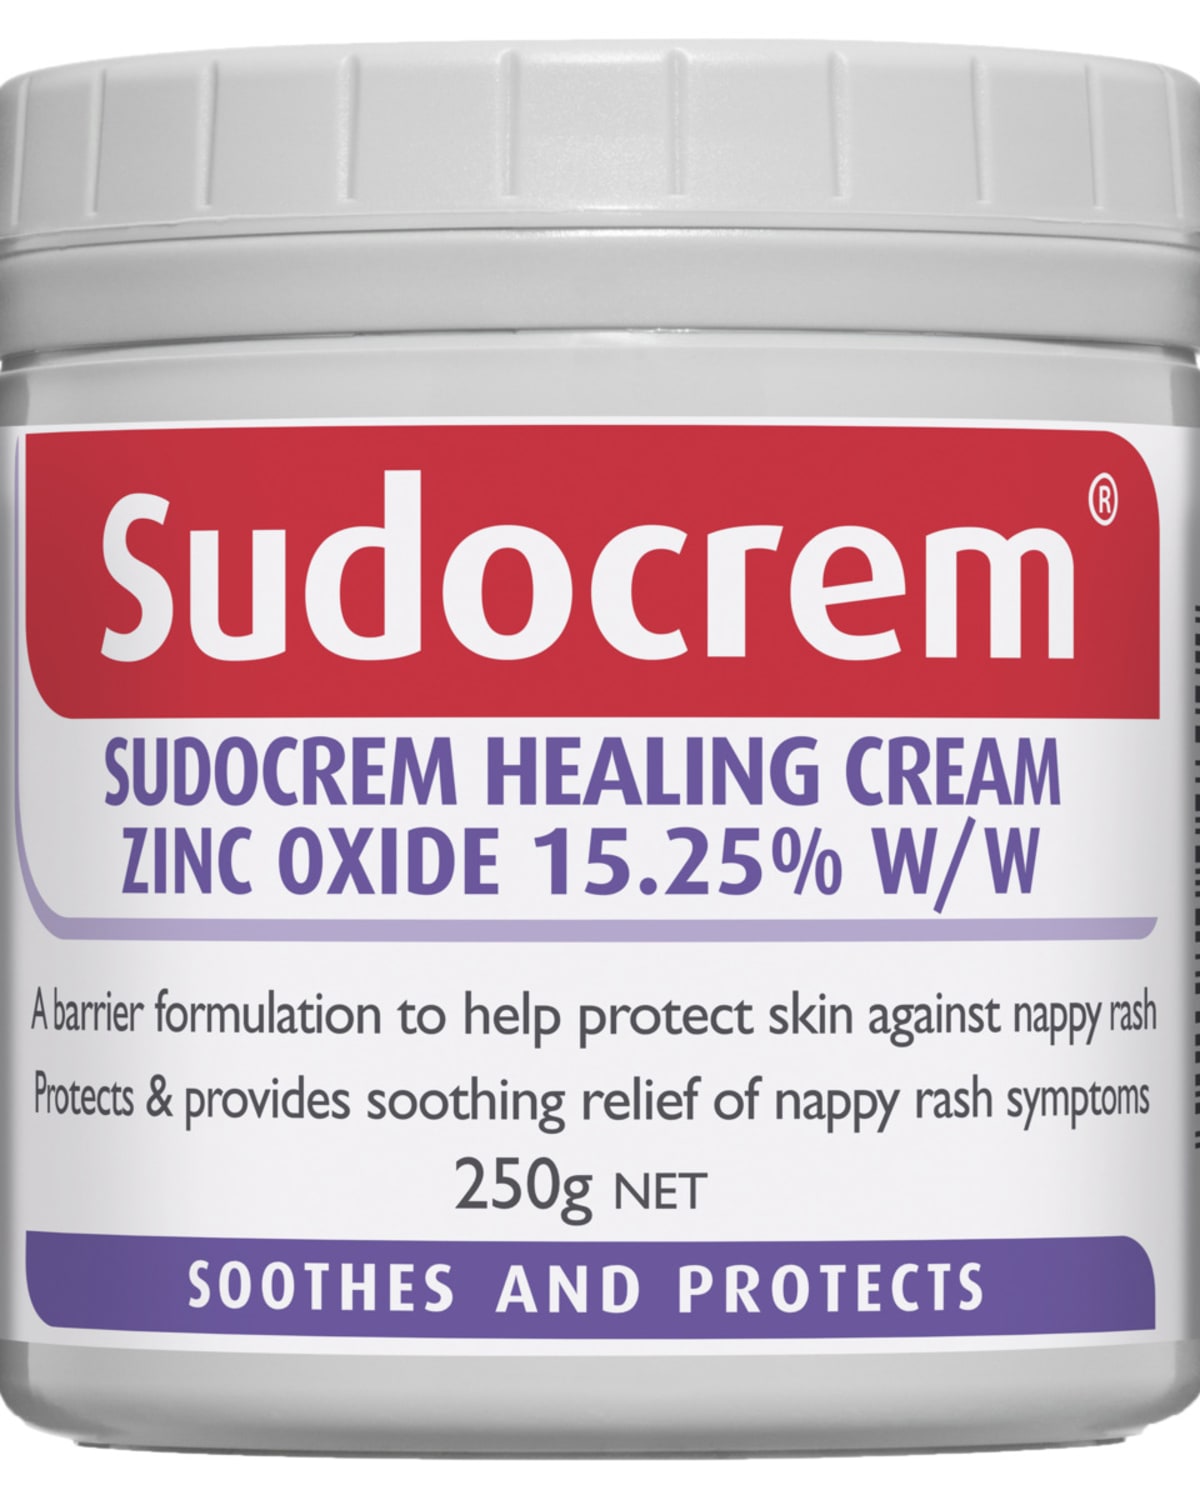 Sudocrem Healing Cream 250g - Kmart